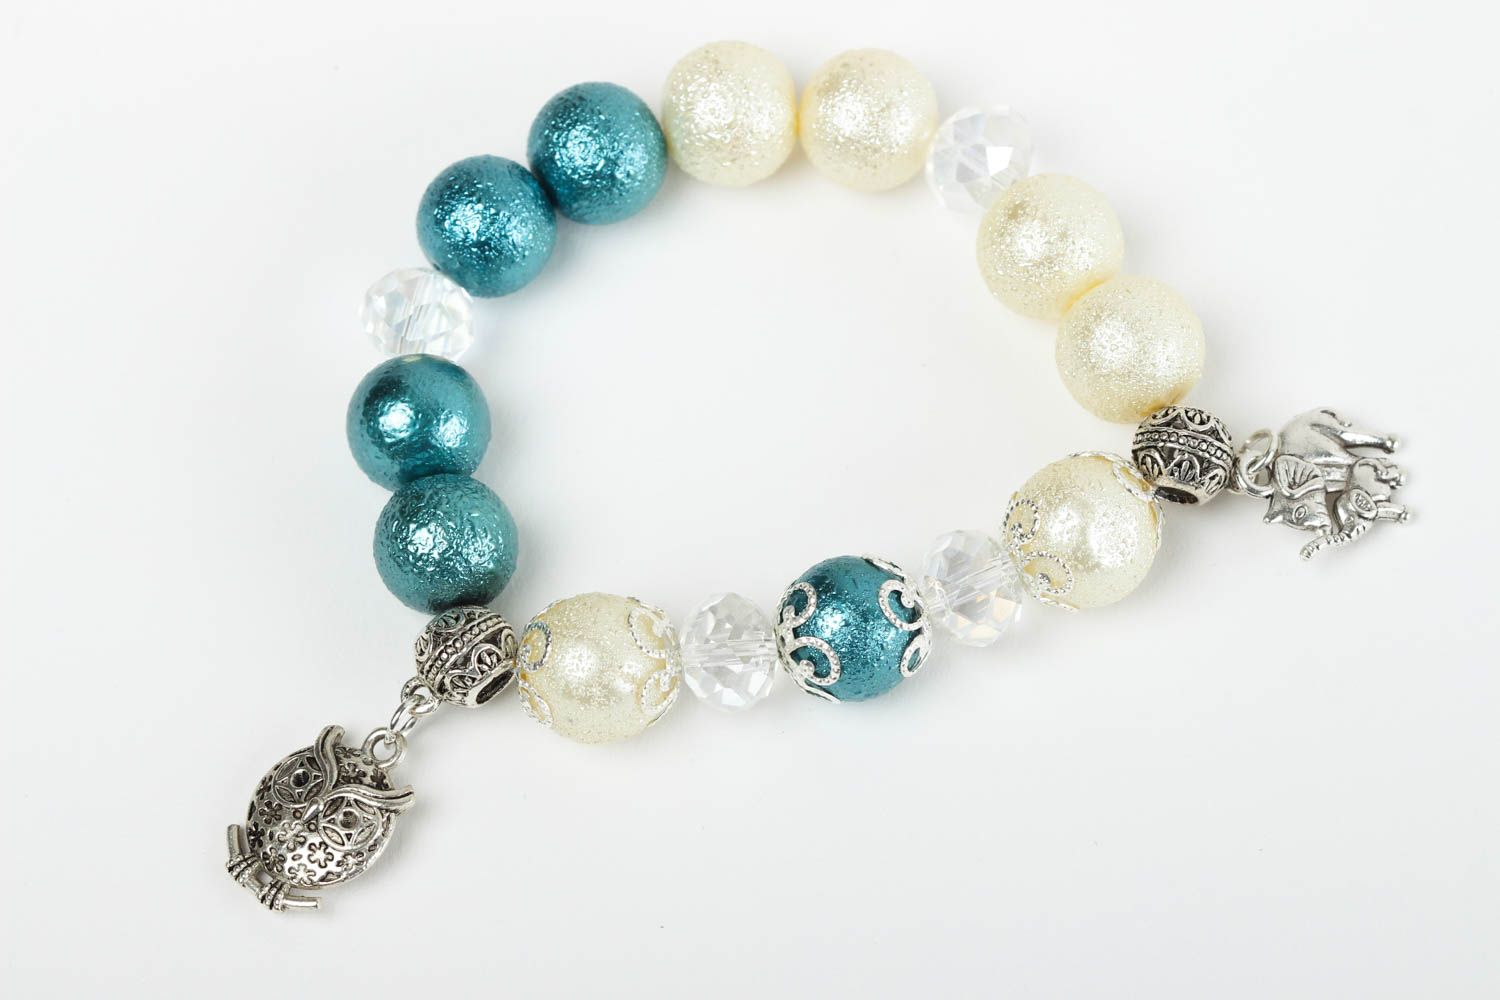 Handmade bracelet bead bracelet designer accessories fashion jewelry gift ideas photo 1